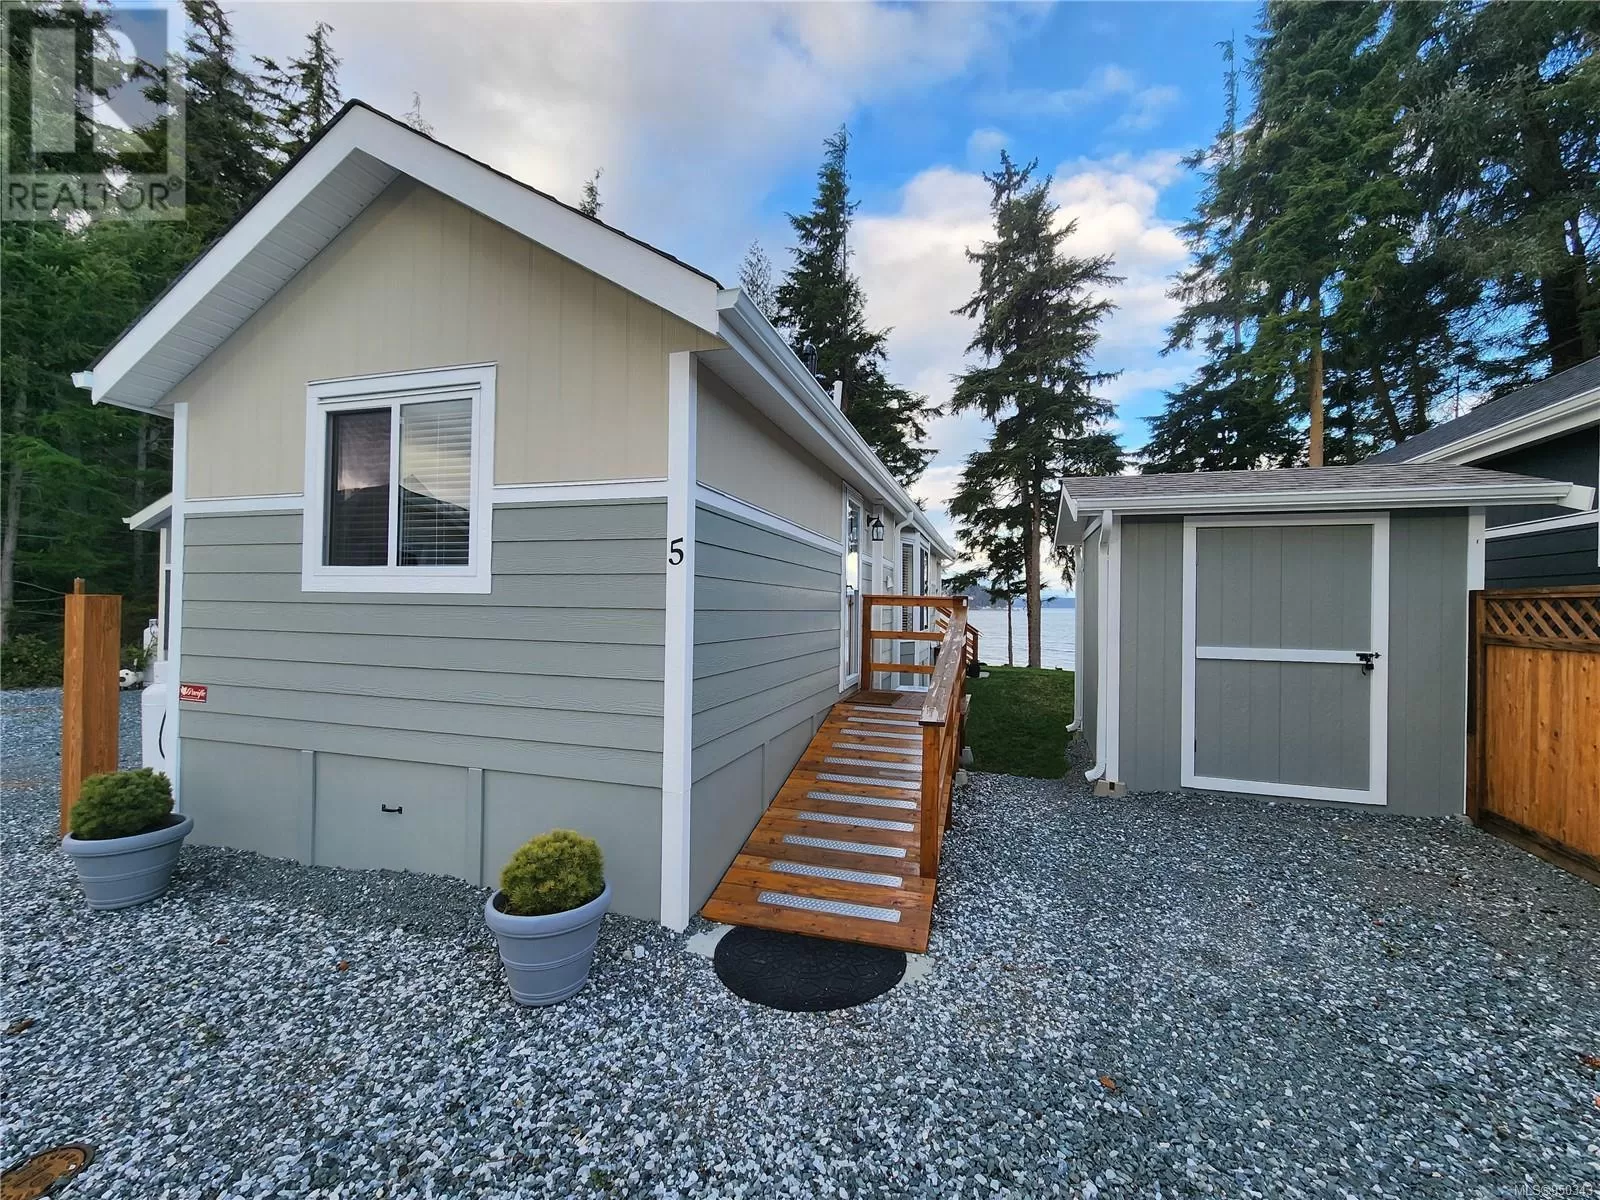 Manufactured Home for rent: 5 1 Alder Bay Rd, Port McNeill, British Columbia V0N 2R0